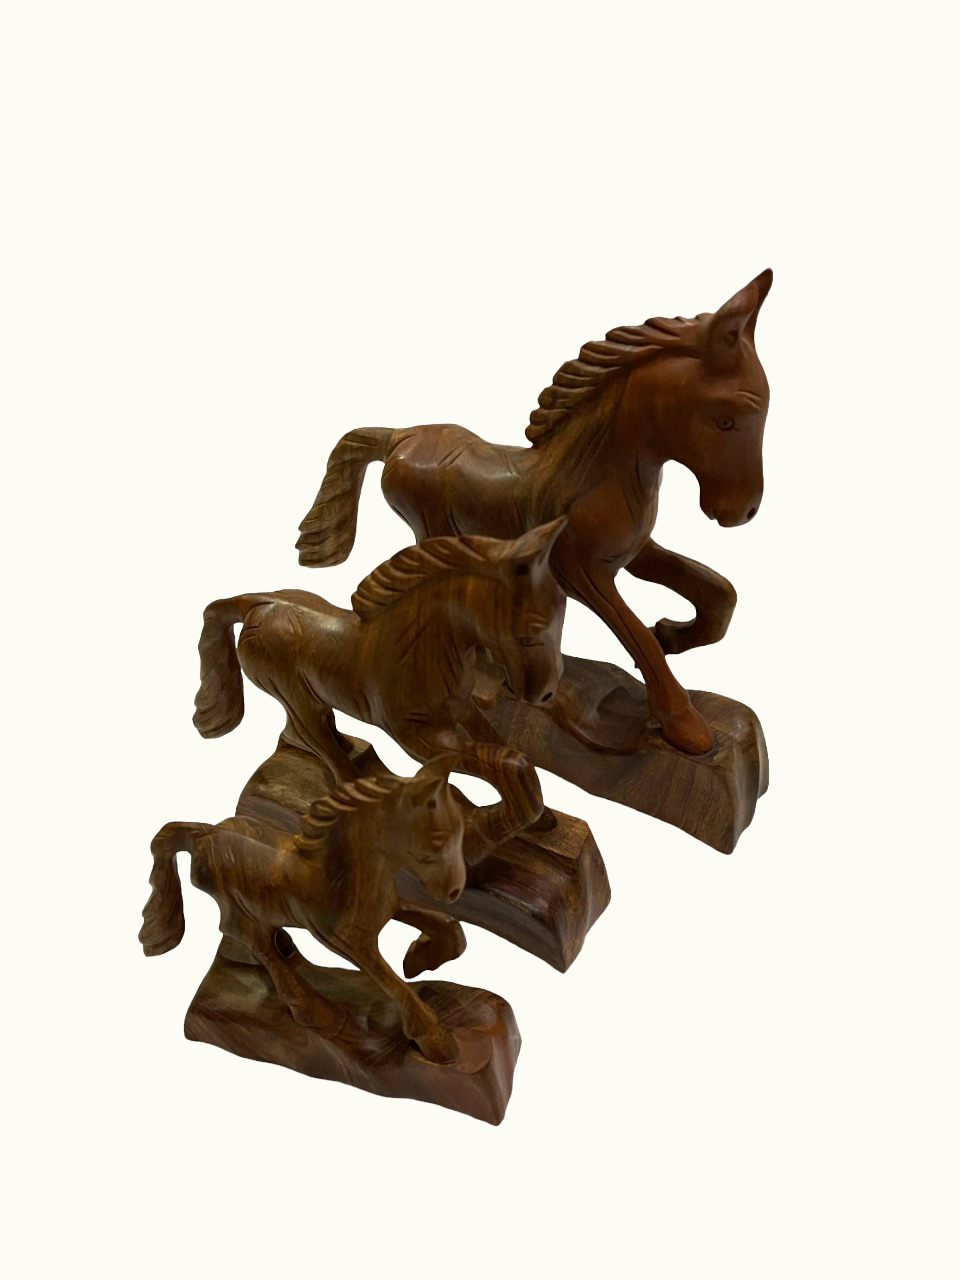 Beautiful Wooden Horses, The Best Running Horses Sculptures.